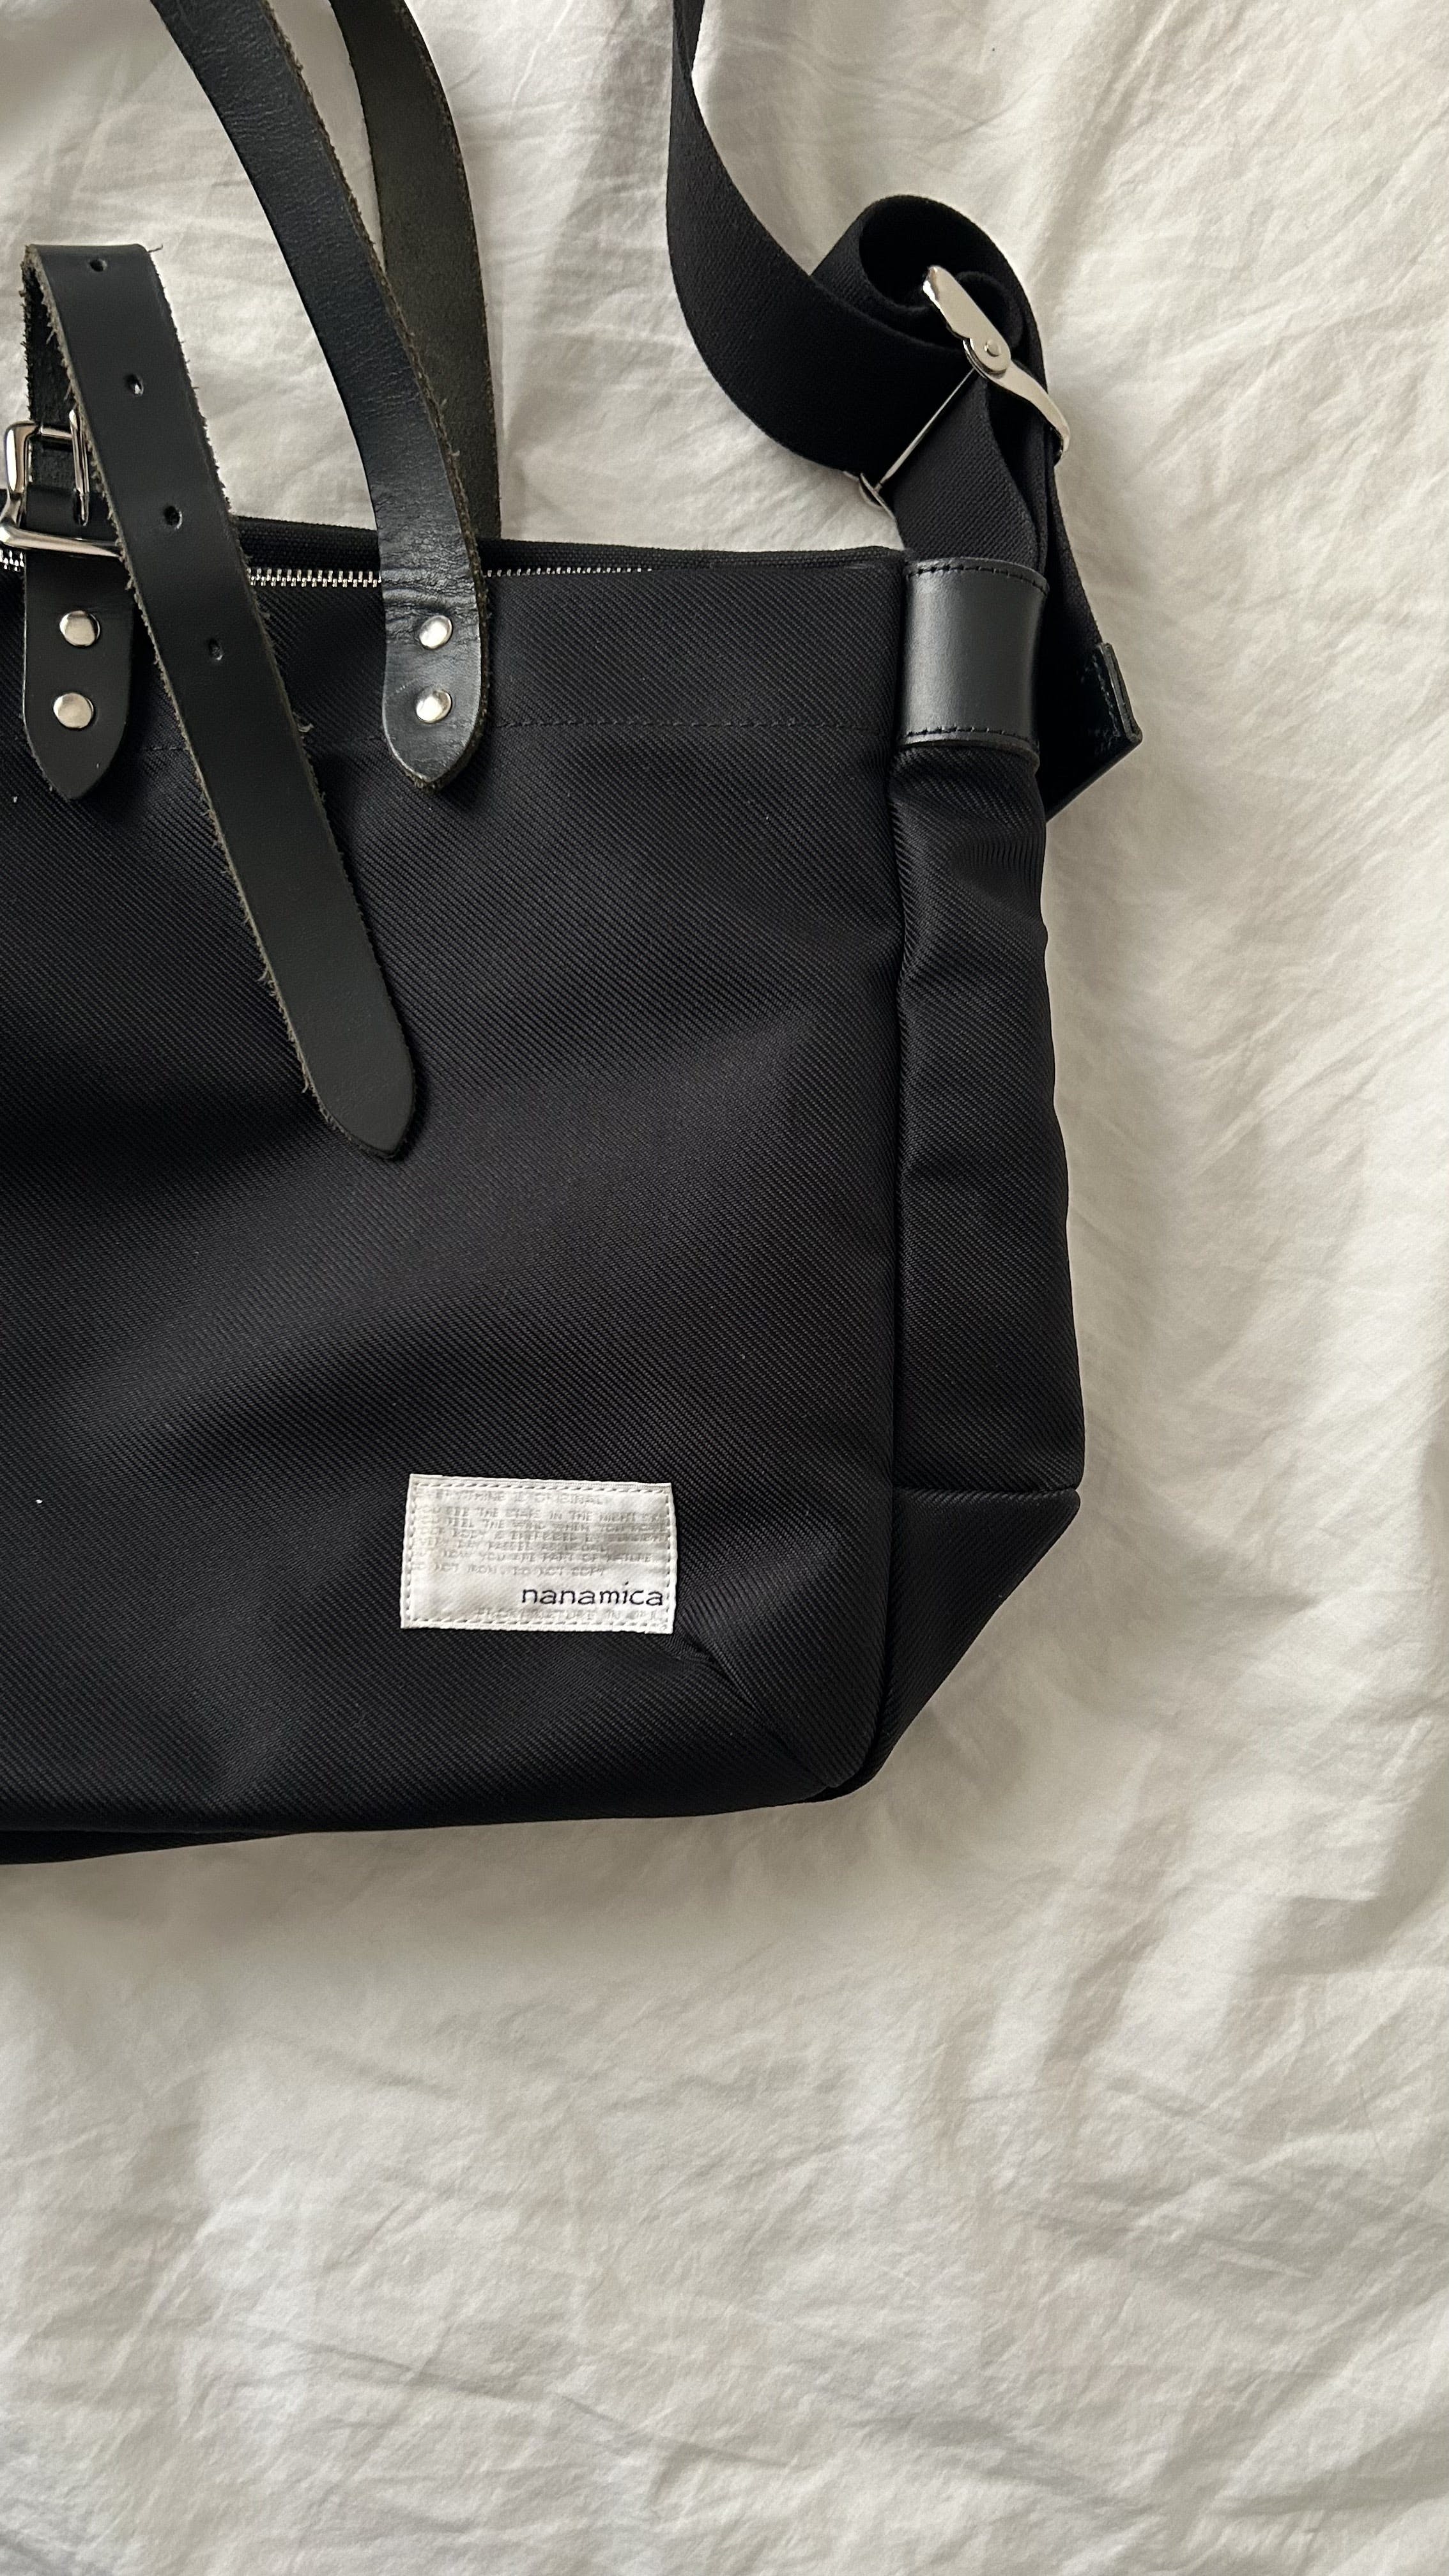 brand new and never worn black cordura bag - 3